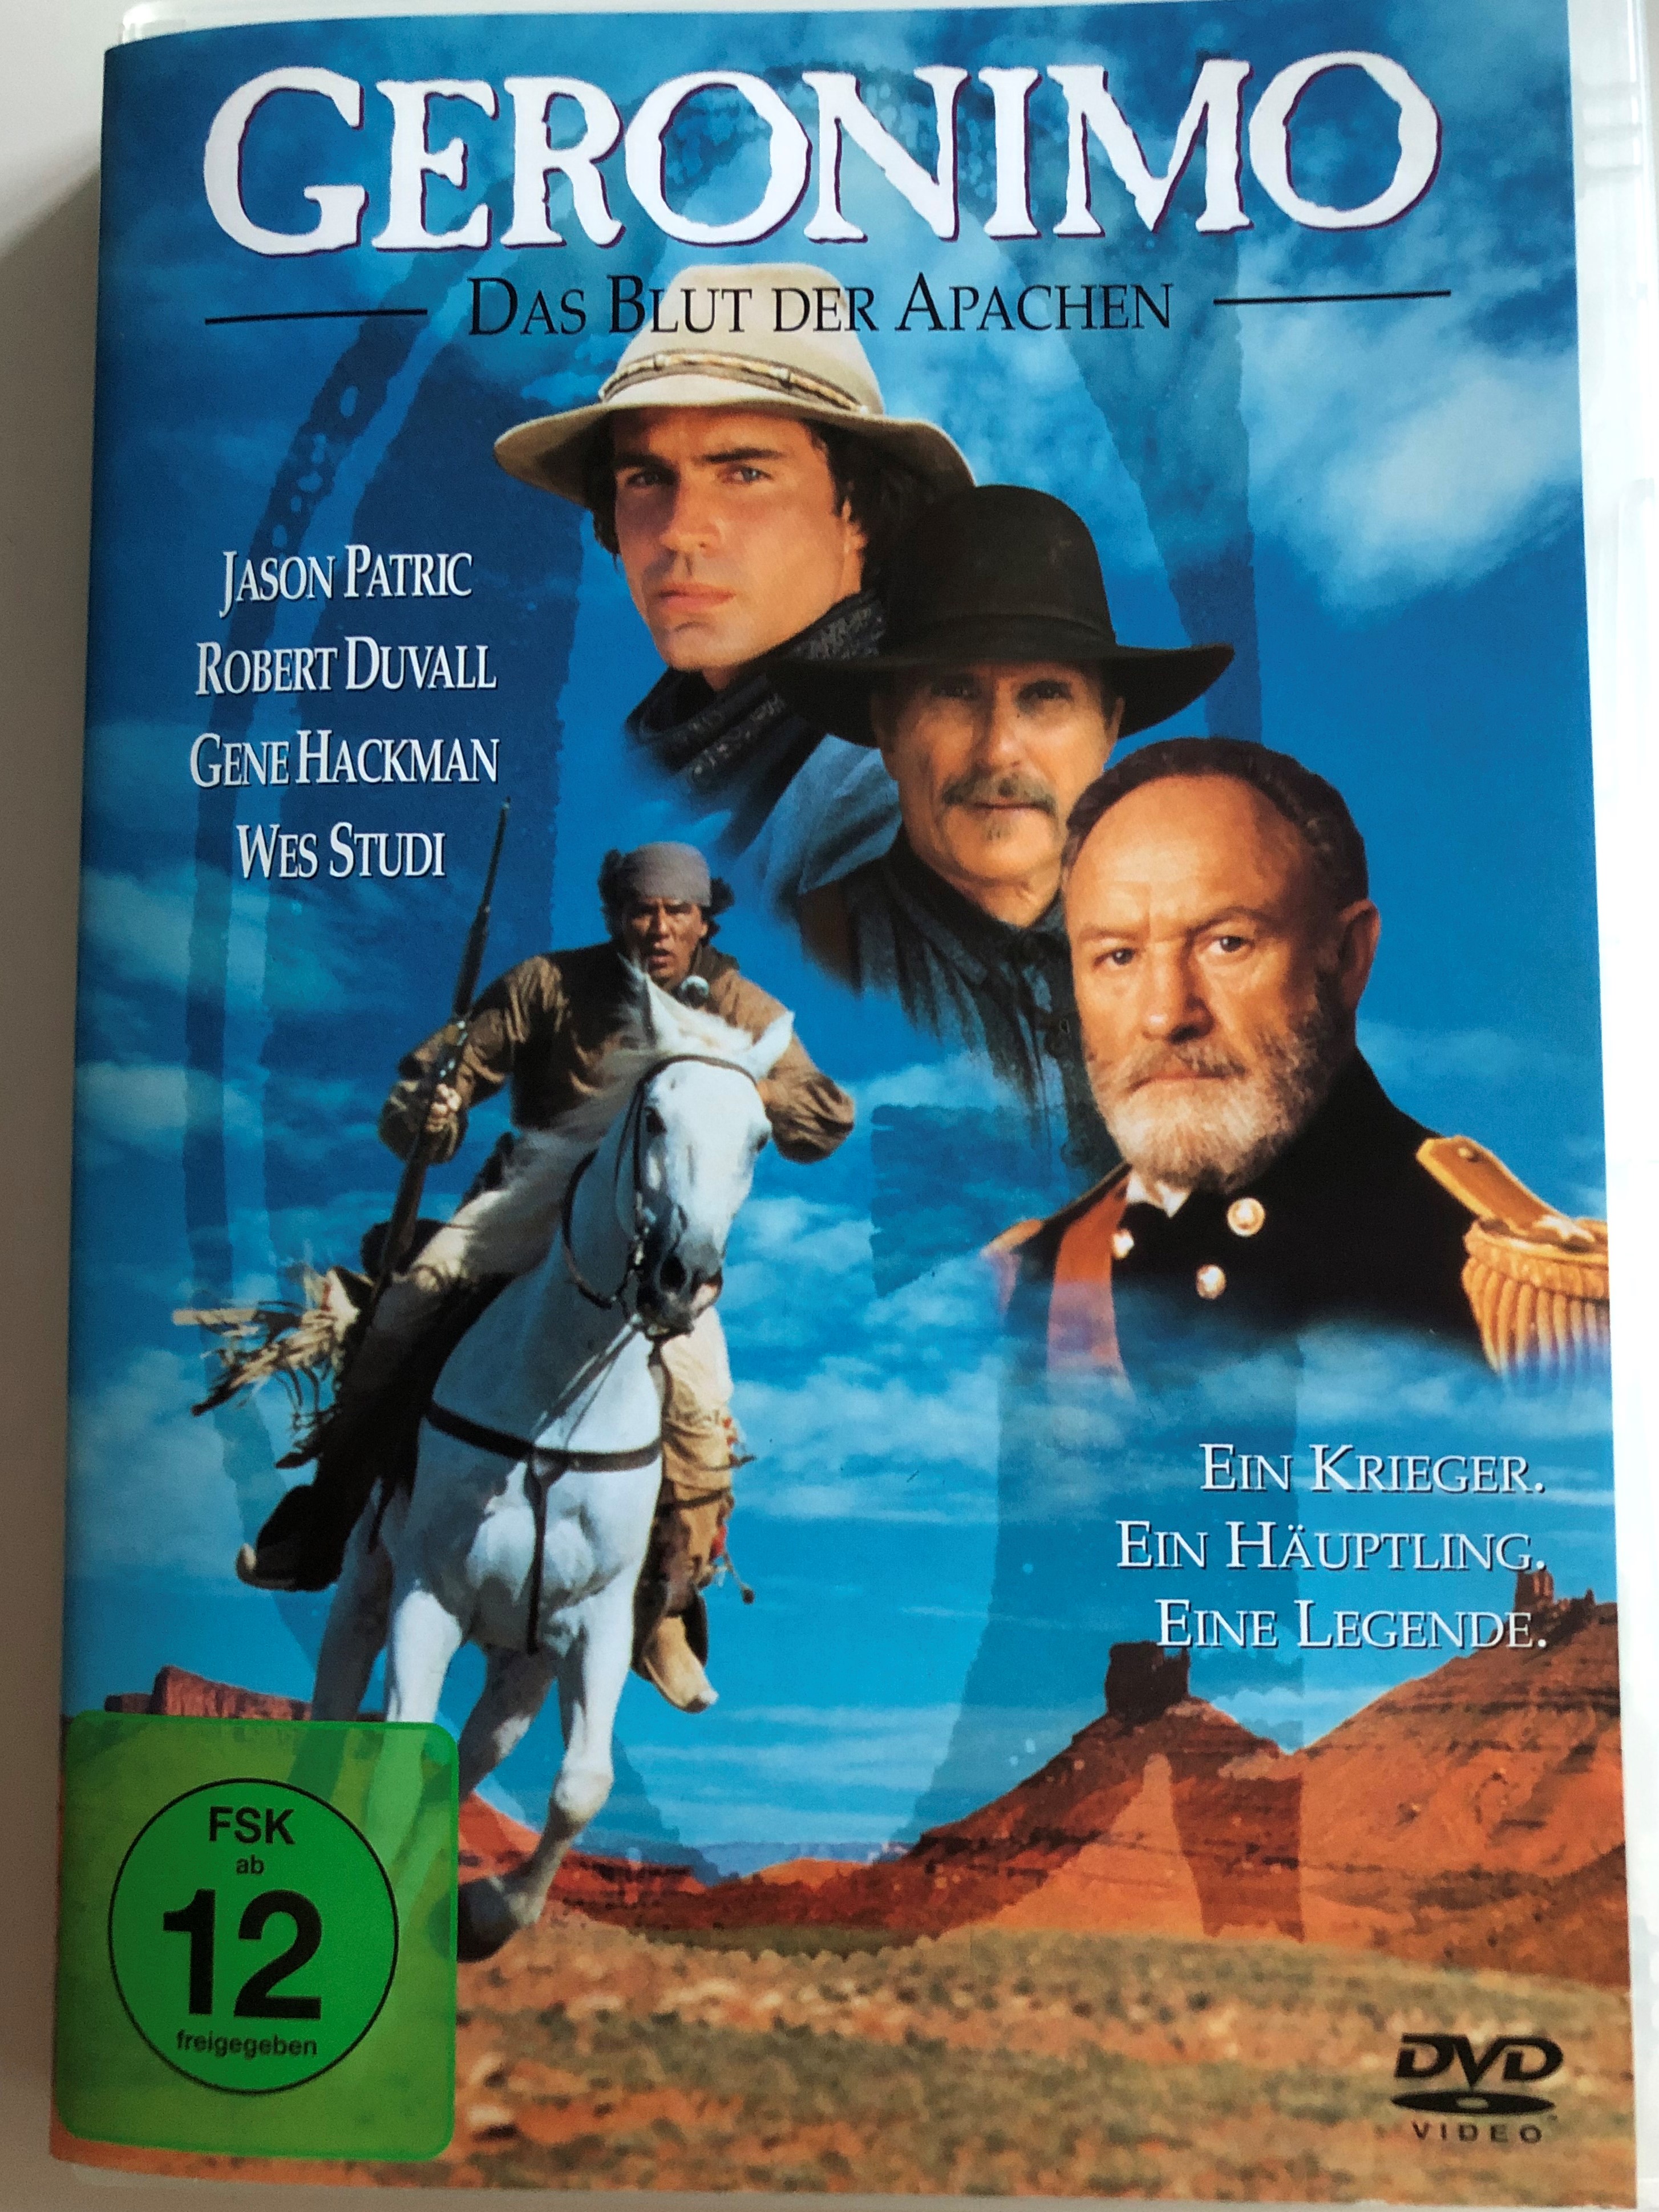 geronimo-das-blut-der-apachen-dvd-1993-geronimo-directed-by-walter-hill-starring-jason-patric-robert-duvall-gene-hackman-wes-studi-1-.jpg